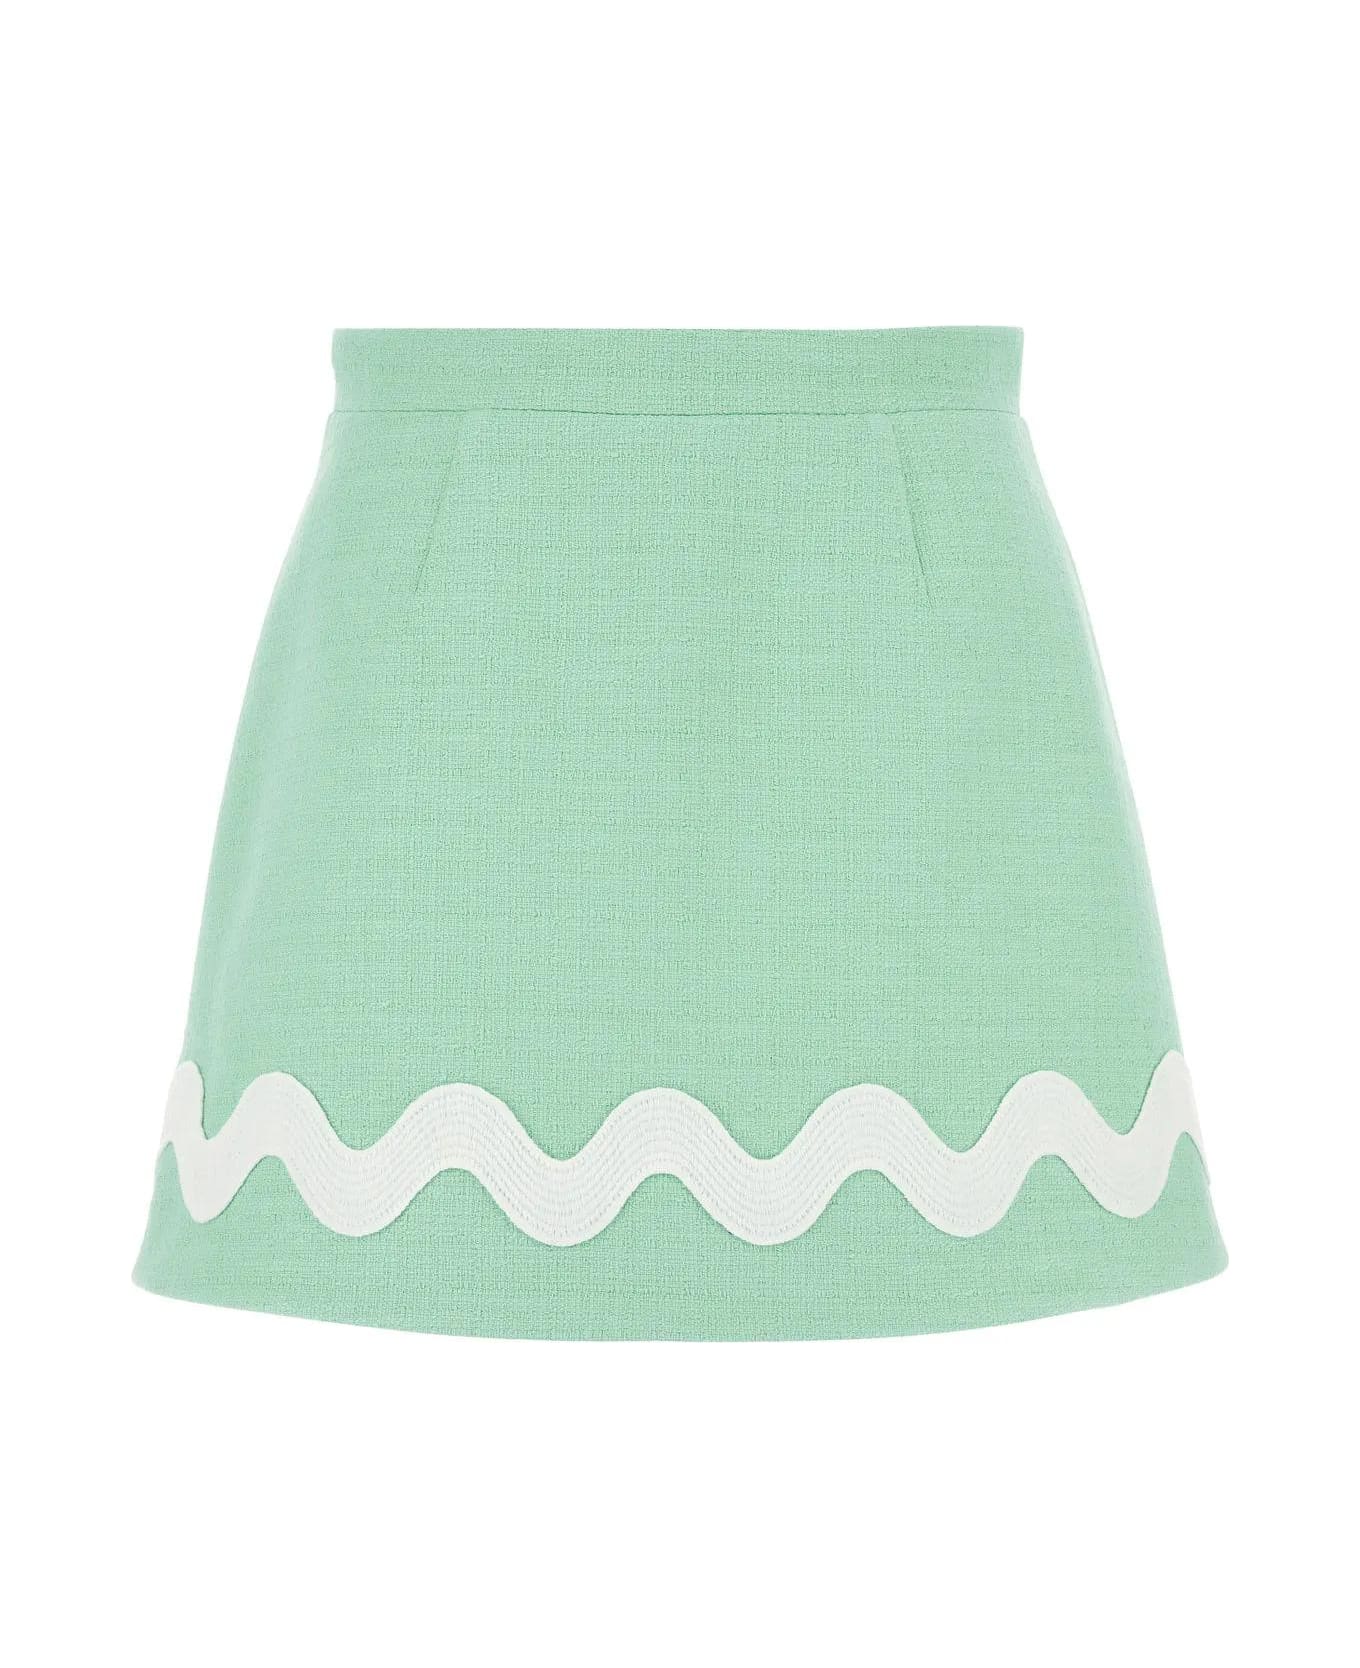 Patou Sea Green Tweed Mini Skirt - Mint green スカート